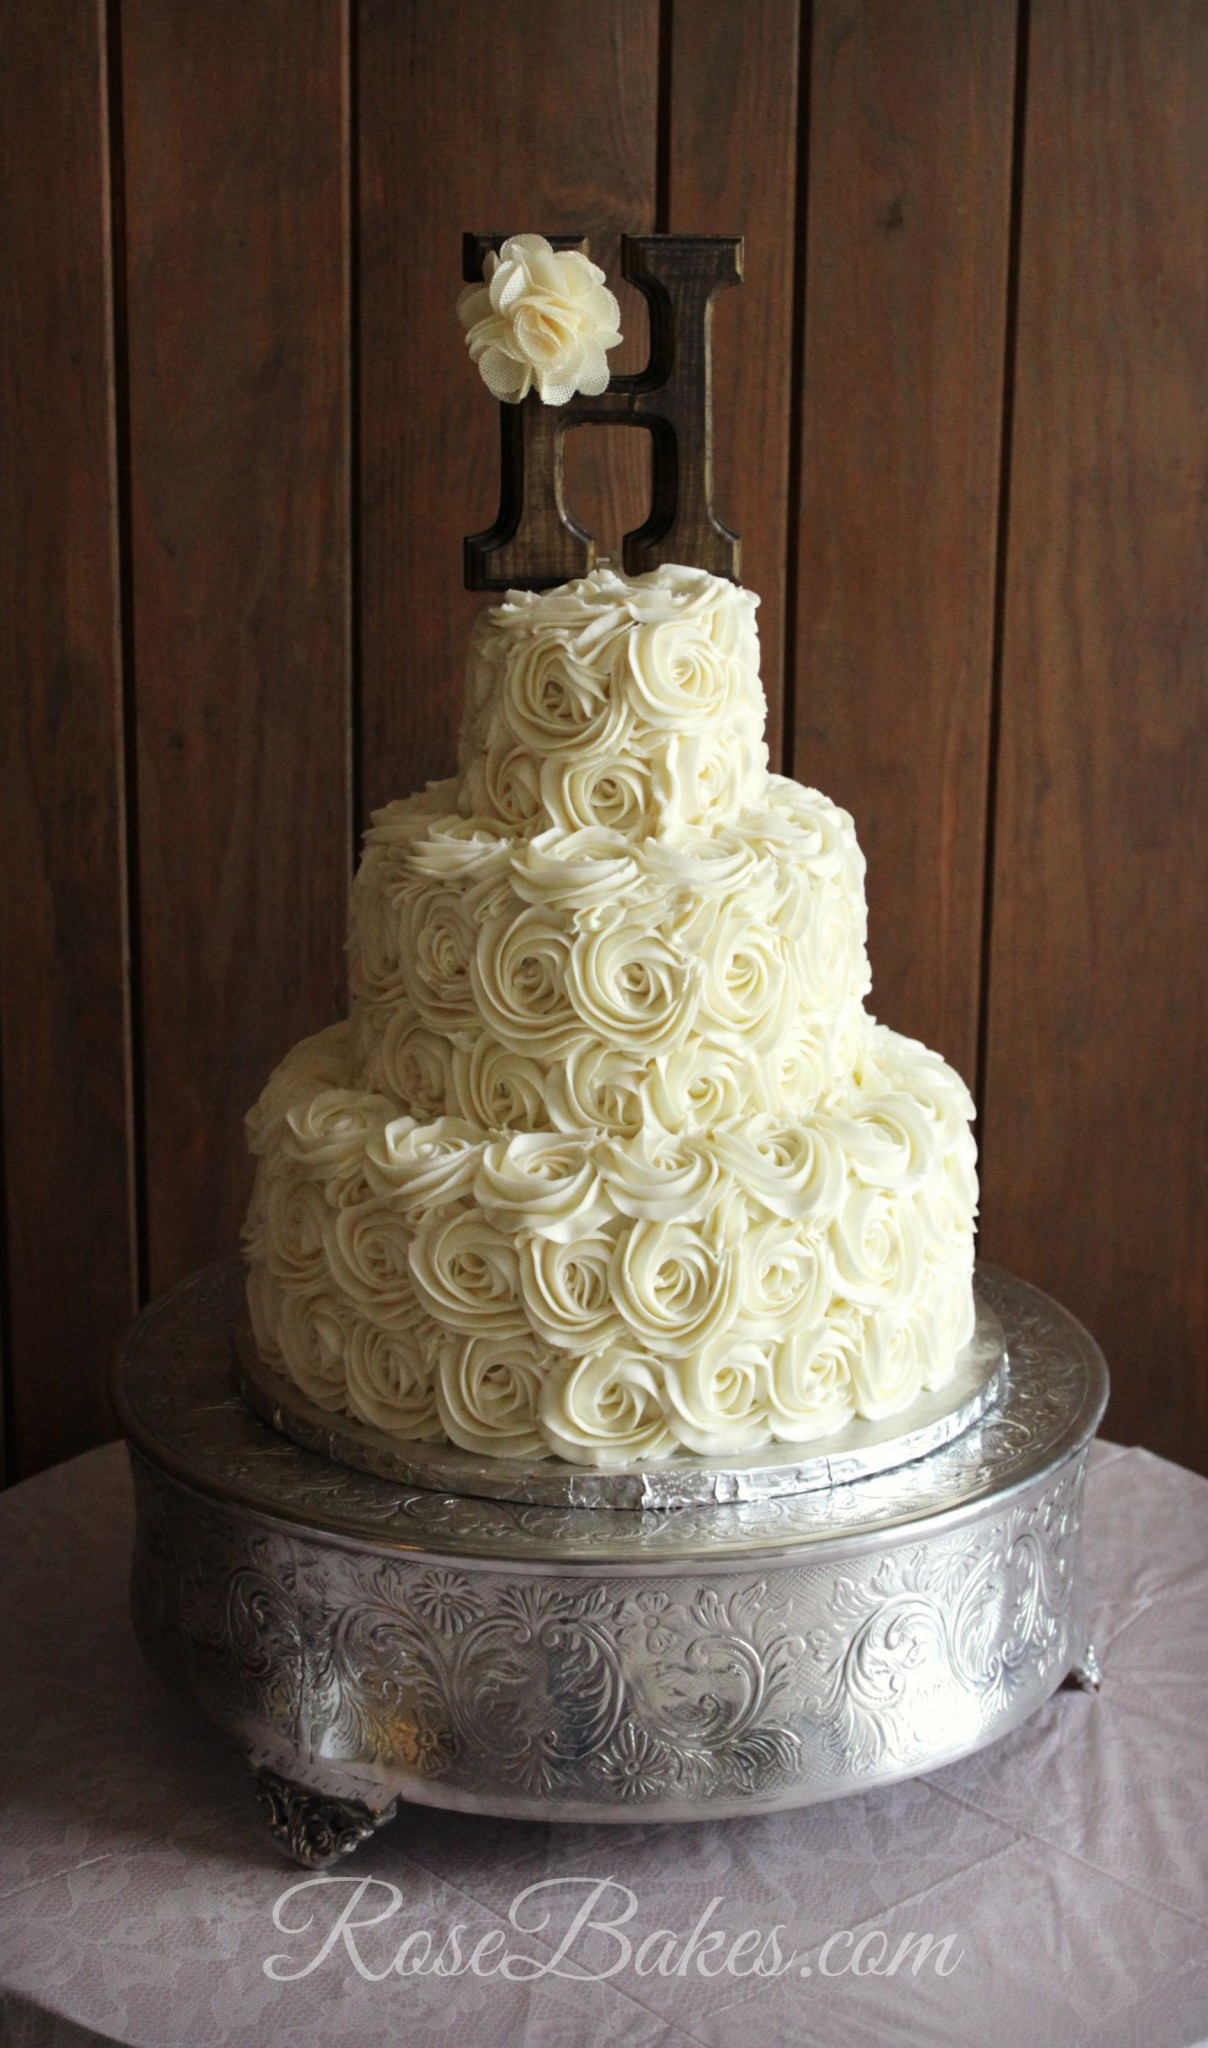 Roses Wedding Cakes
 Rustic Buttercream Roses Wedding Cake Rose Bakes